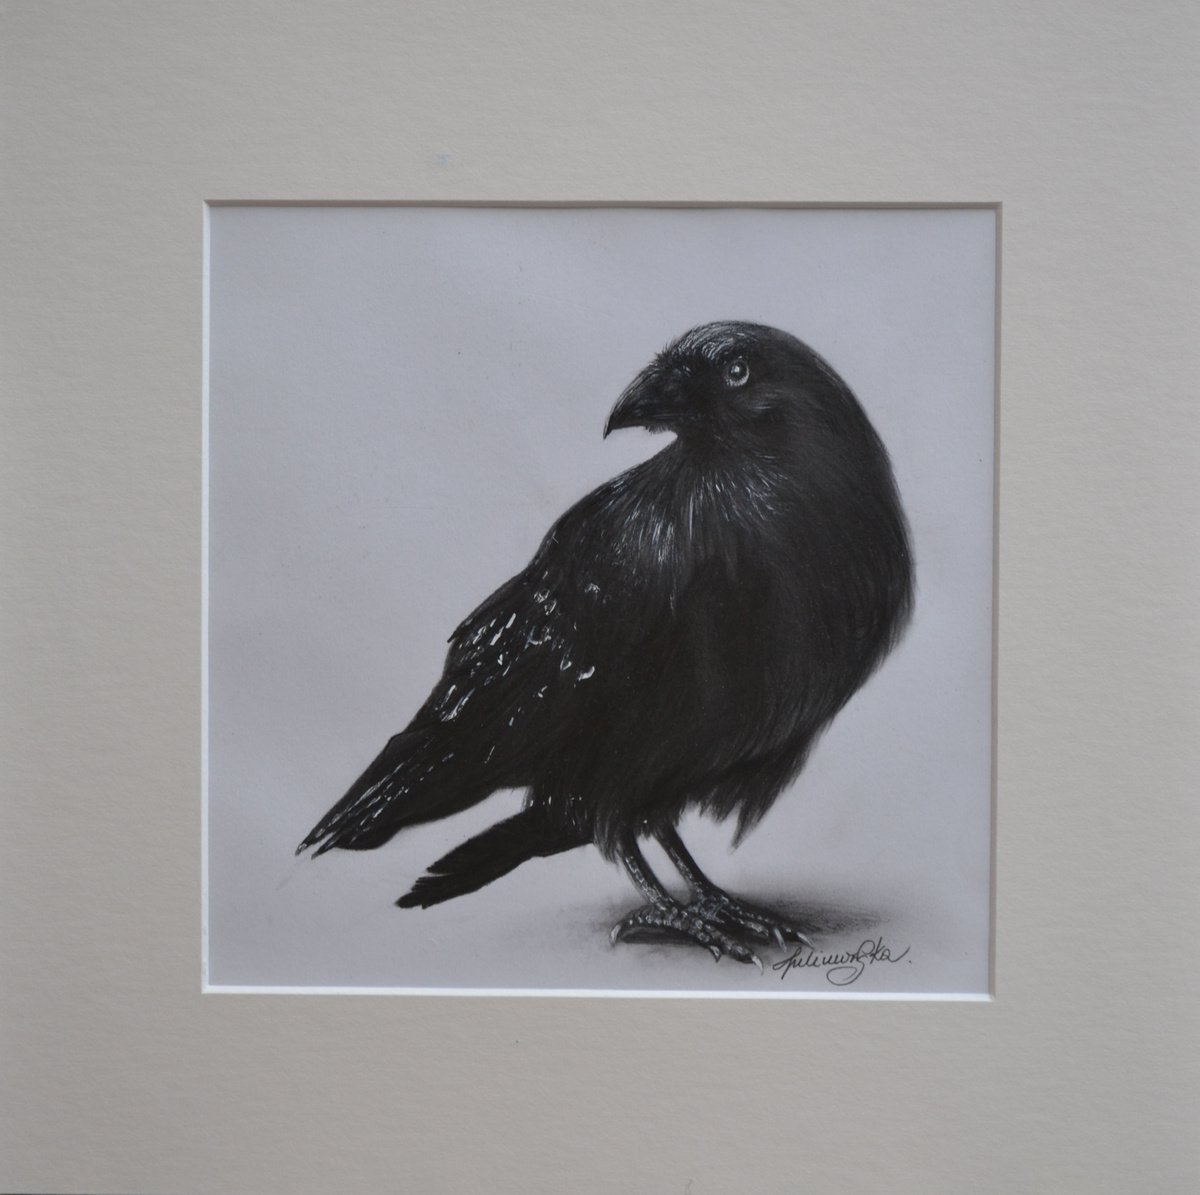 Raven by Maja Tulimowska - Chmielewska